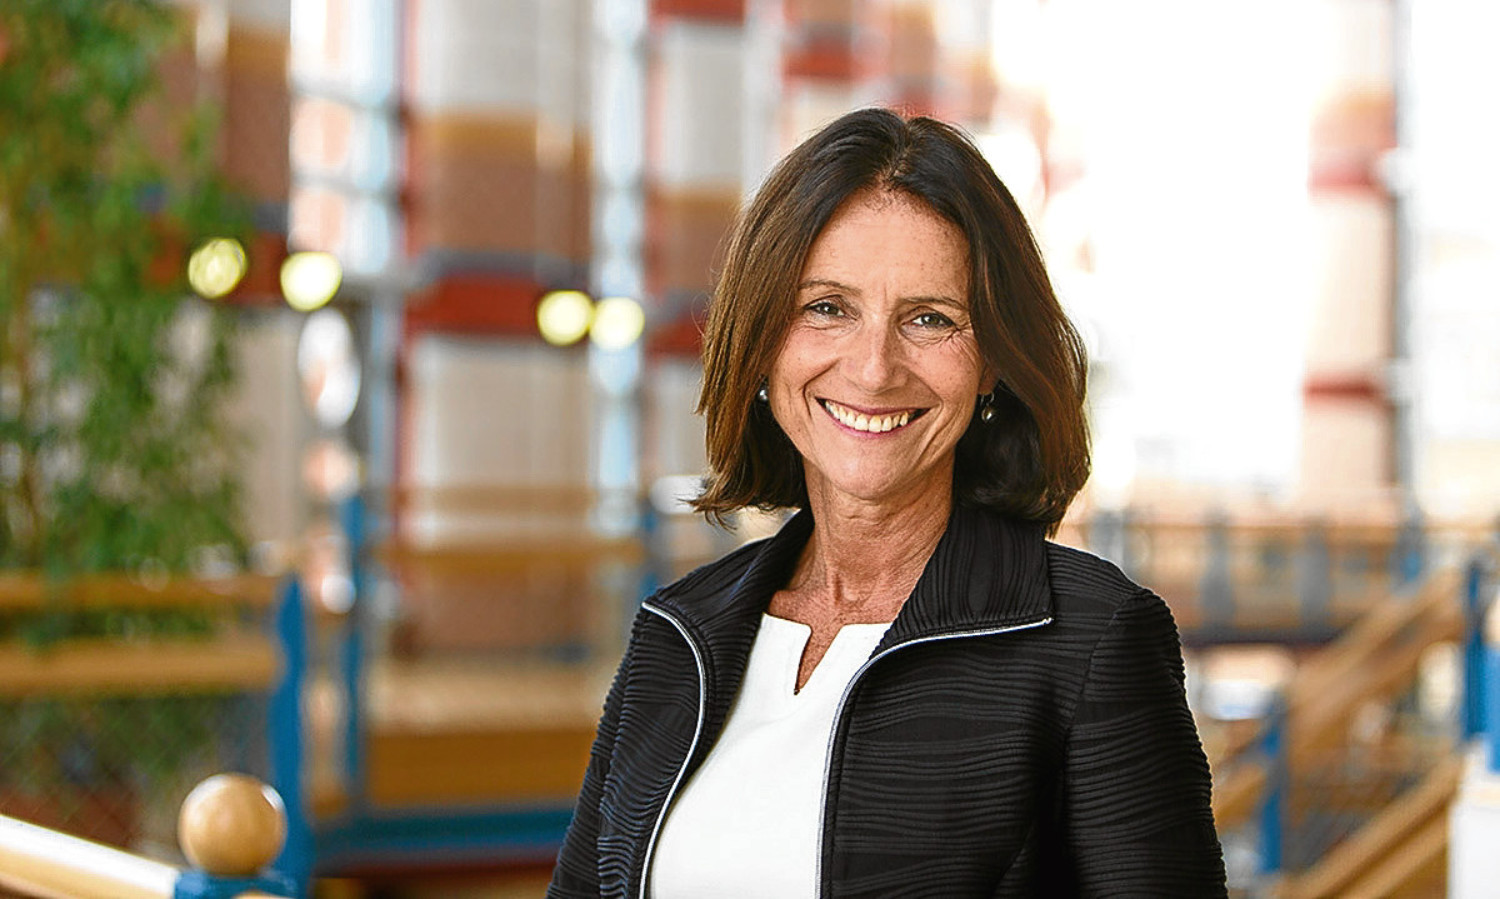 Carolyn Fairbairn, director general of the CBI